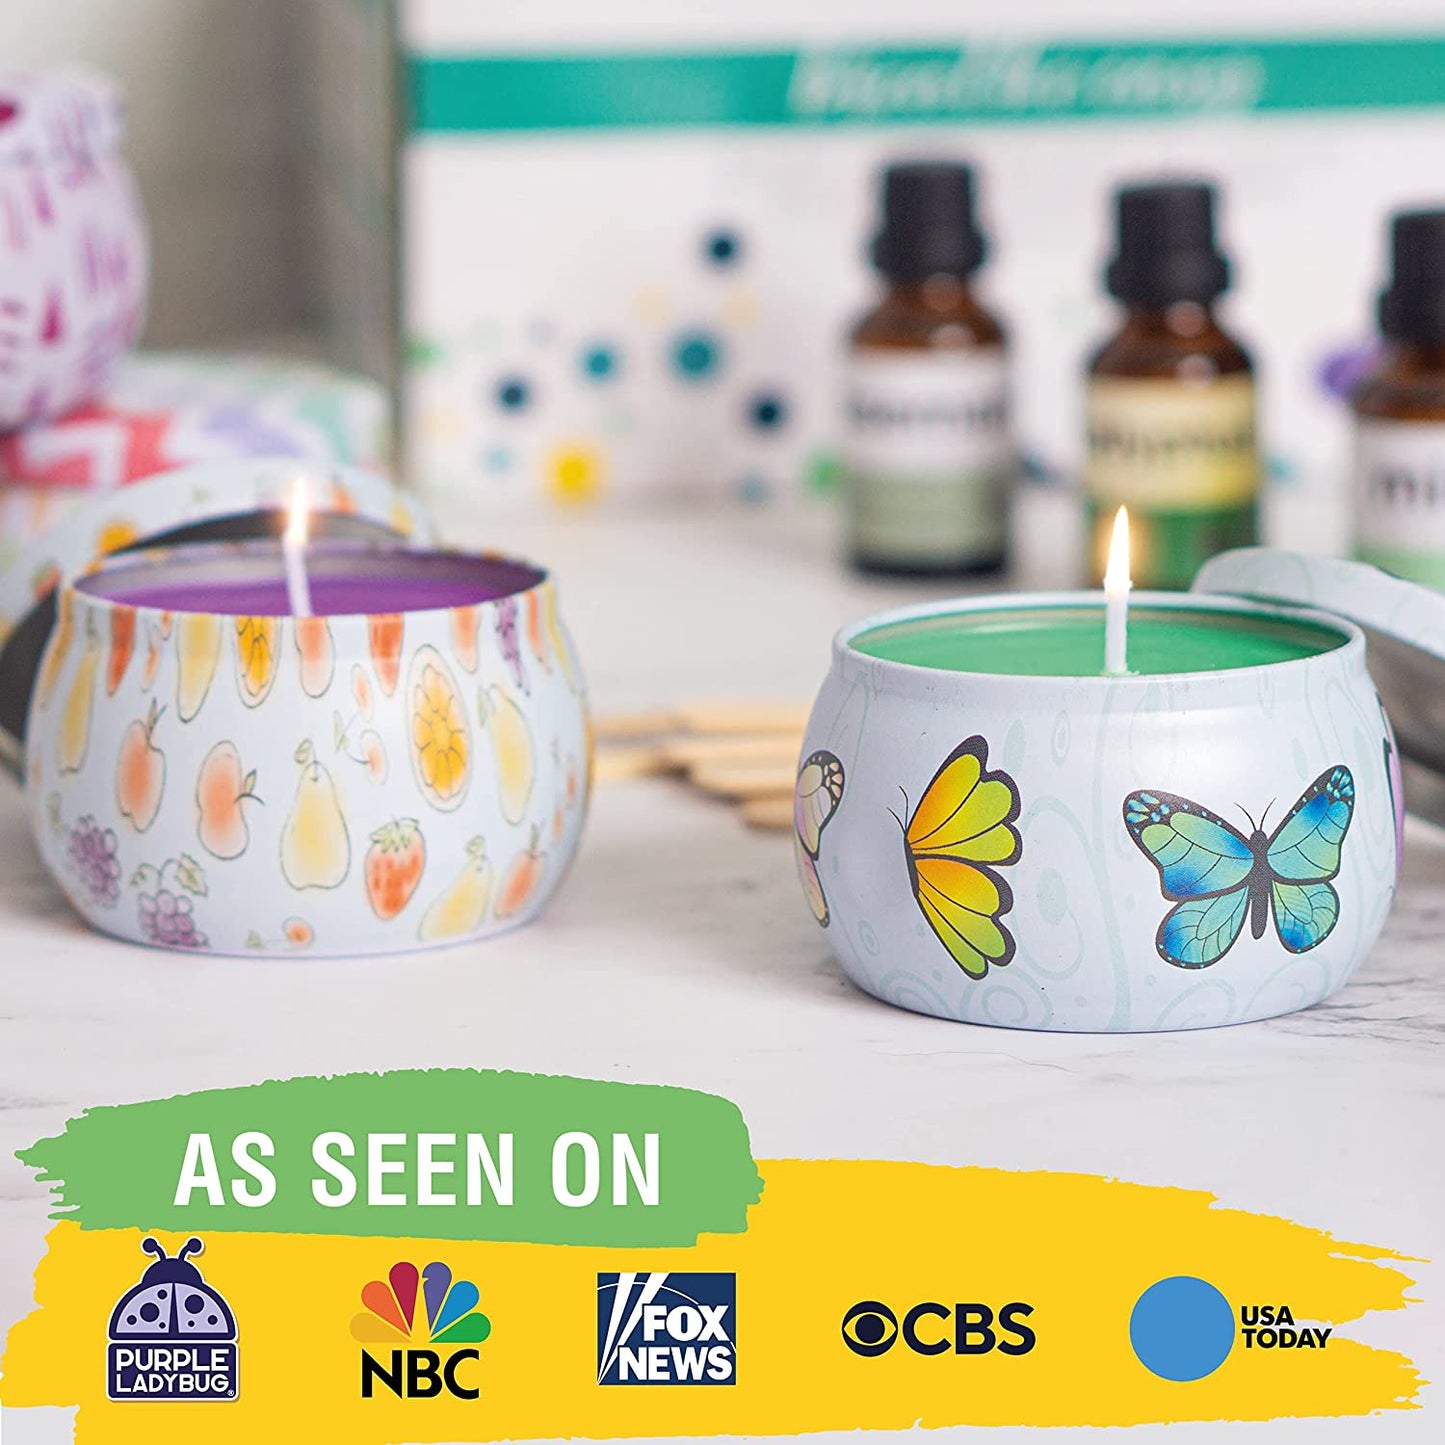 PURPLE LADYBUG DIY Candle Making Kits with Aromatherapy Scents